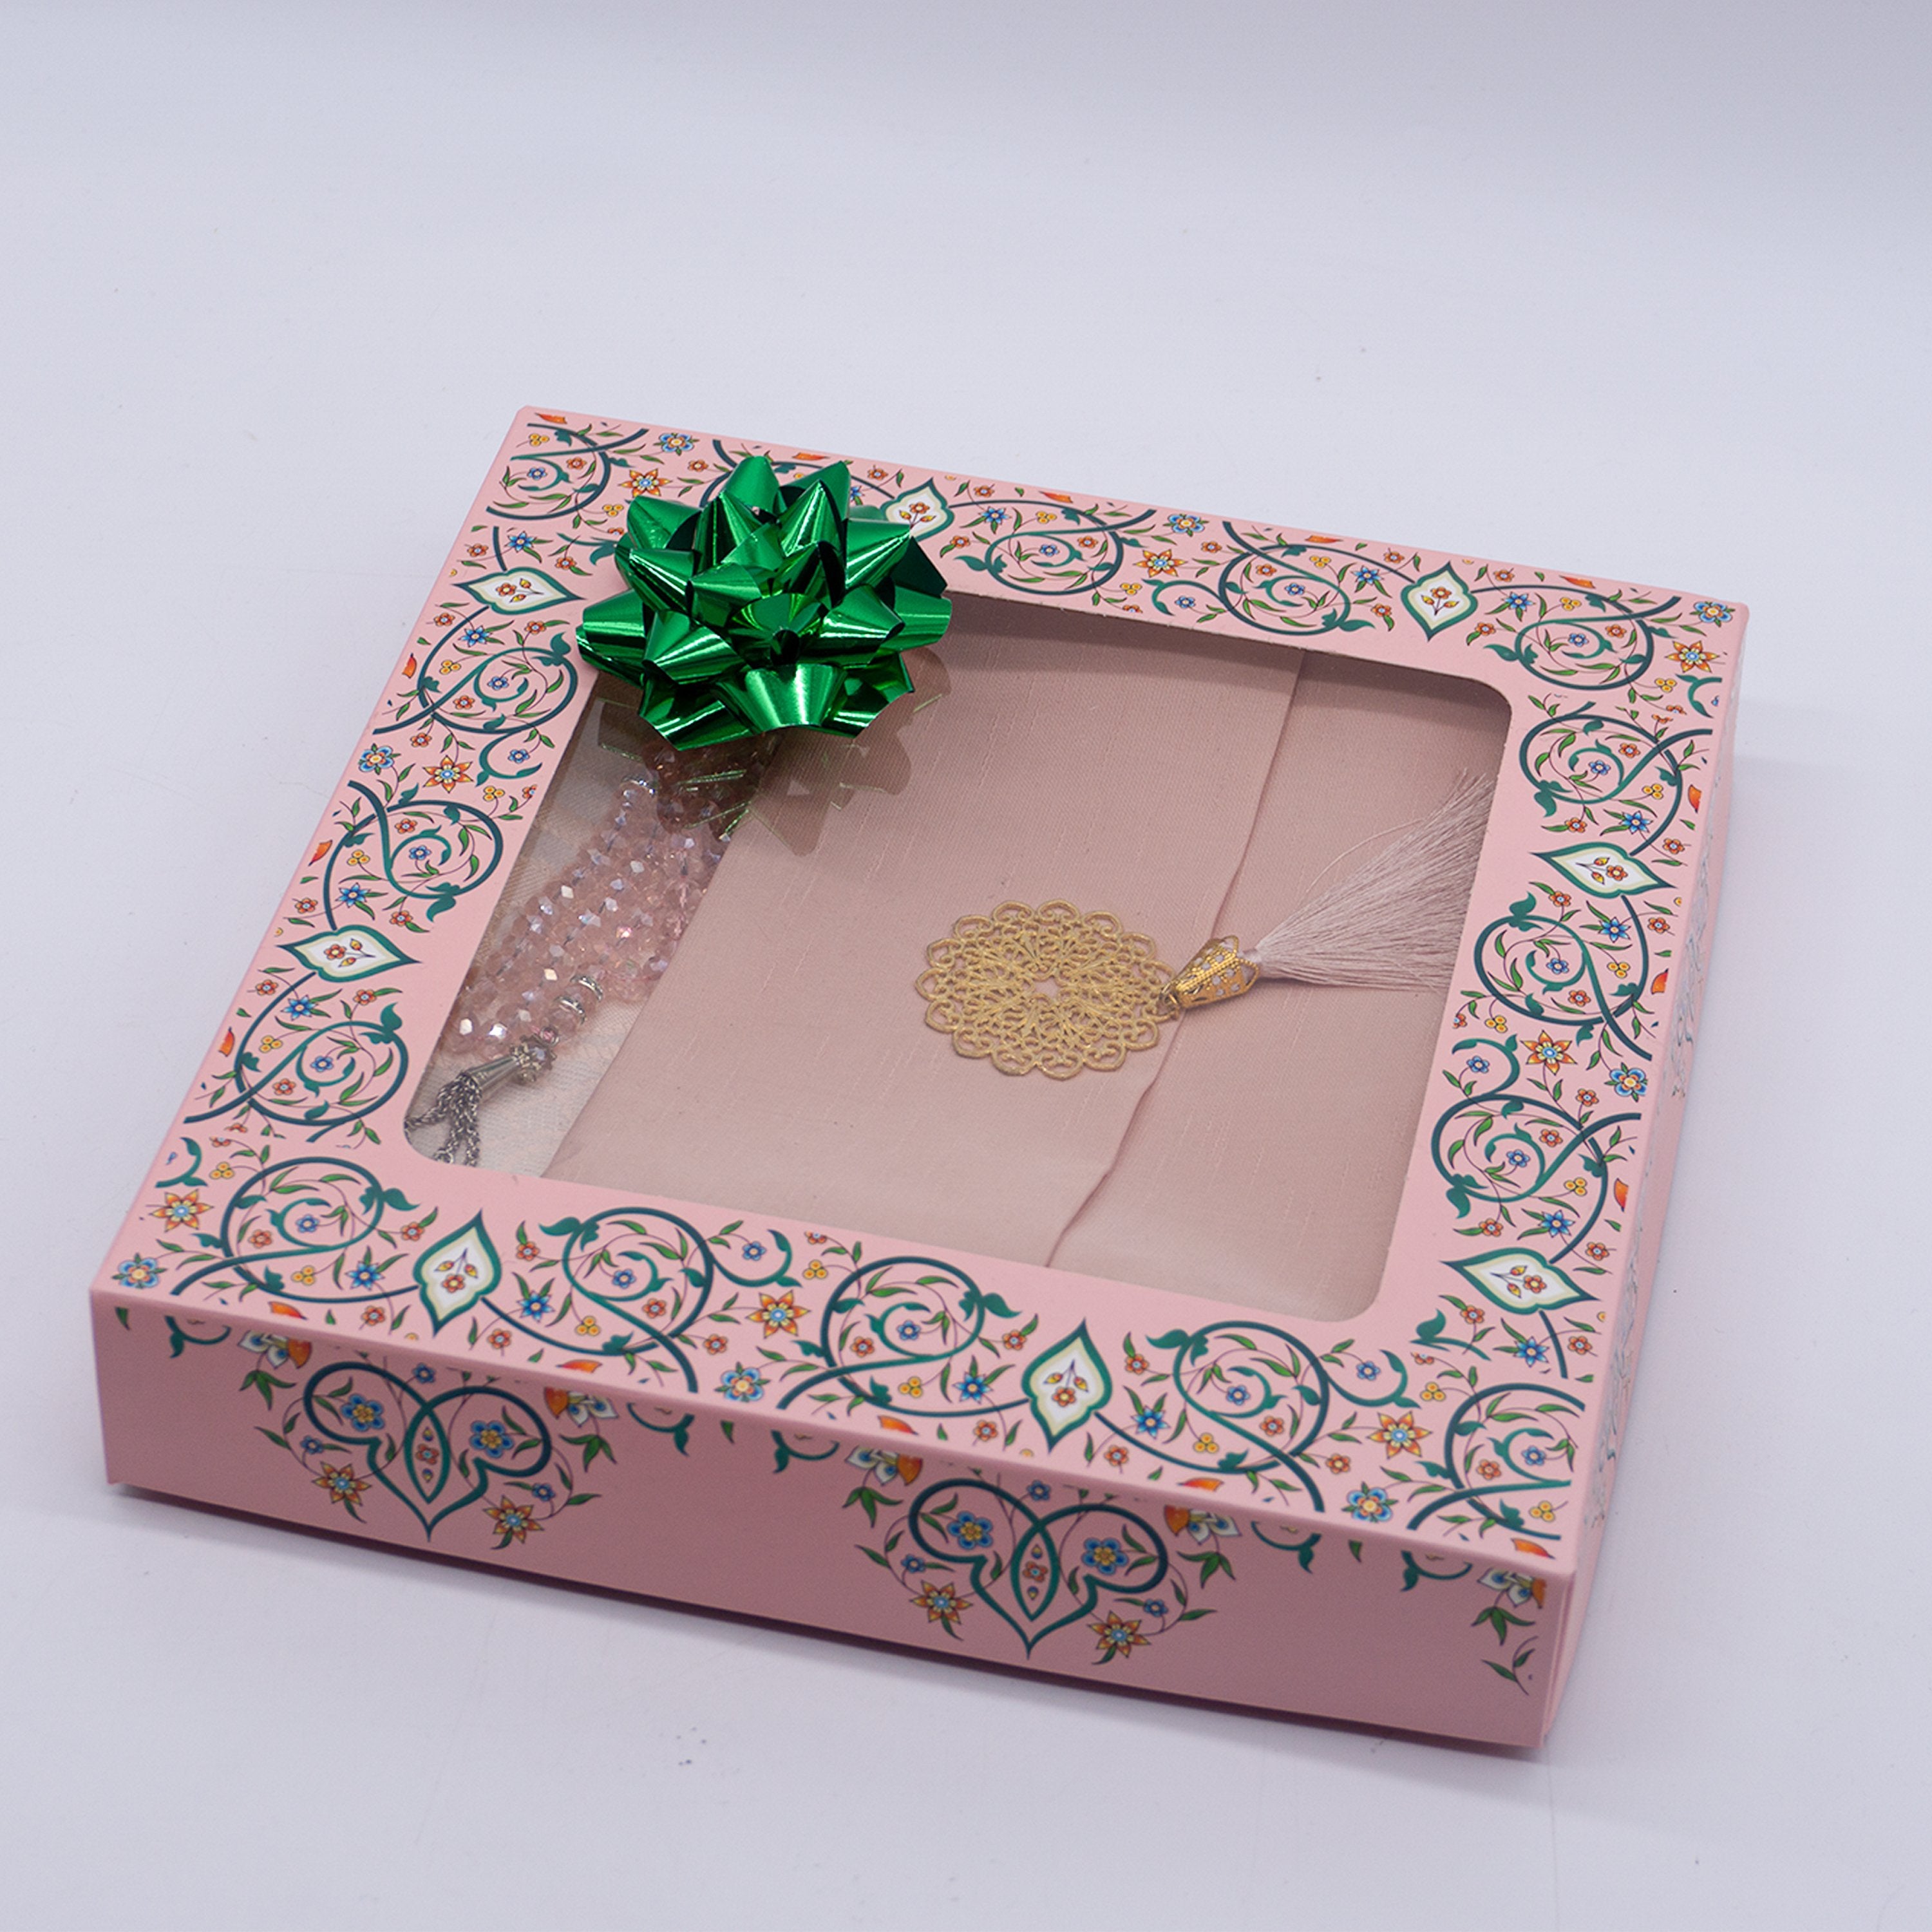 Tekbir's Islamic Gift box contains a Prayer Mat, India | Ubuy